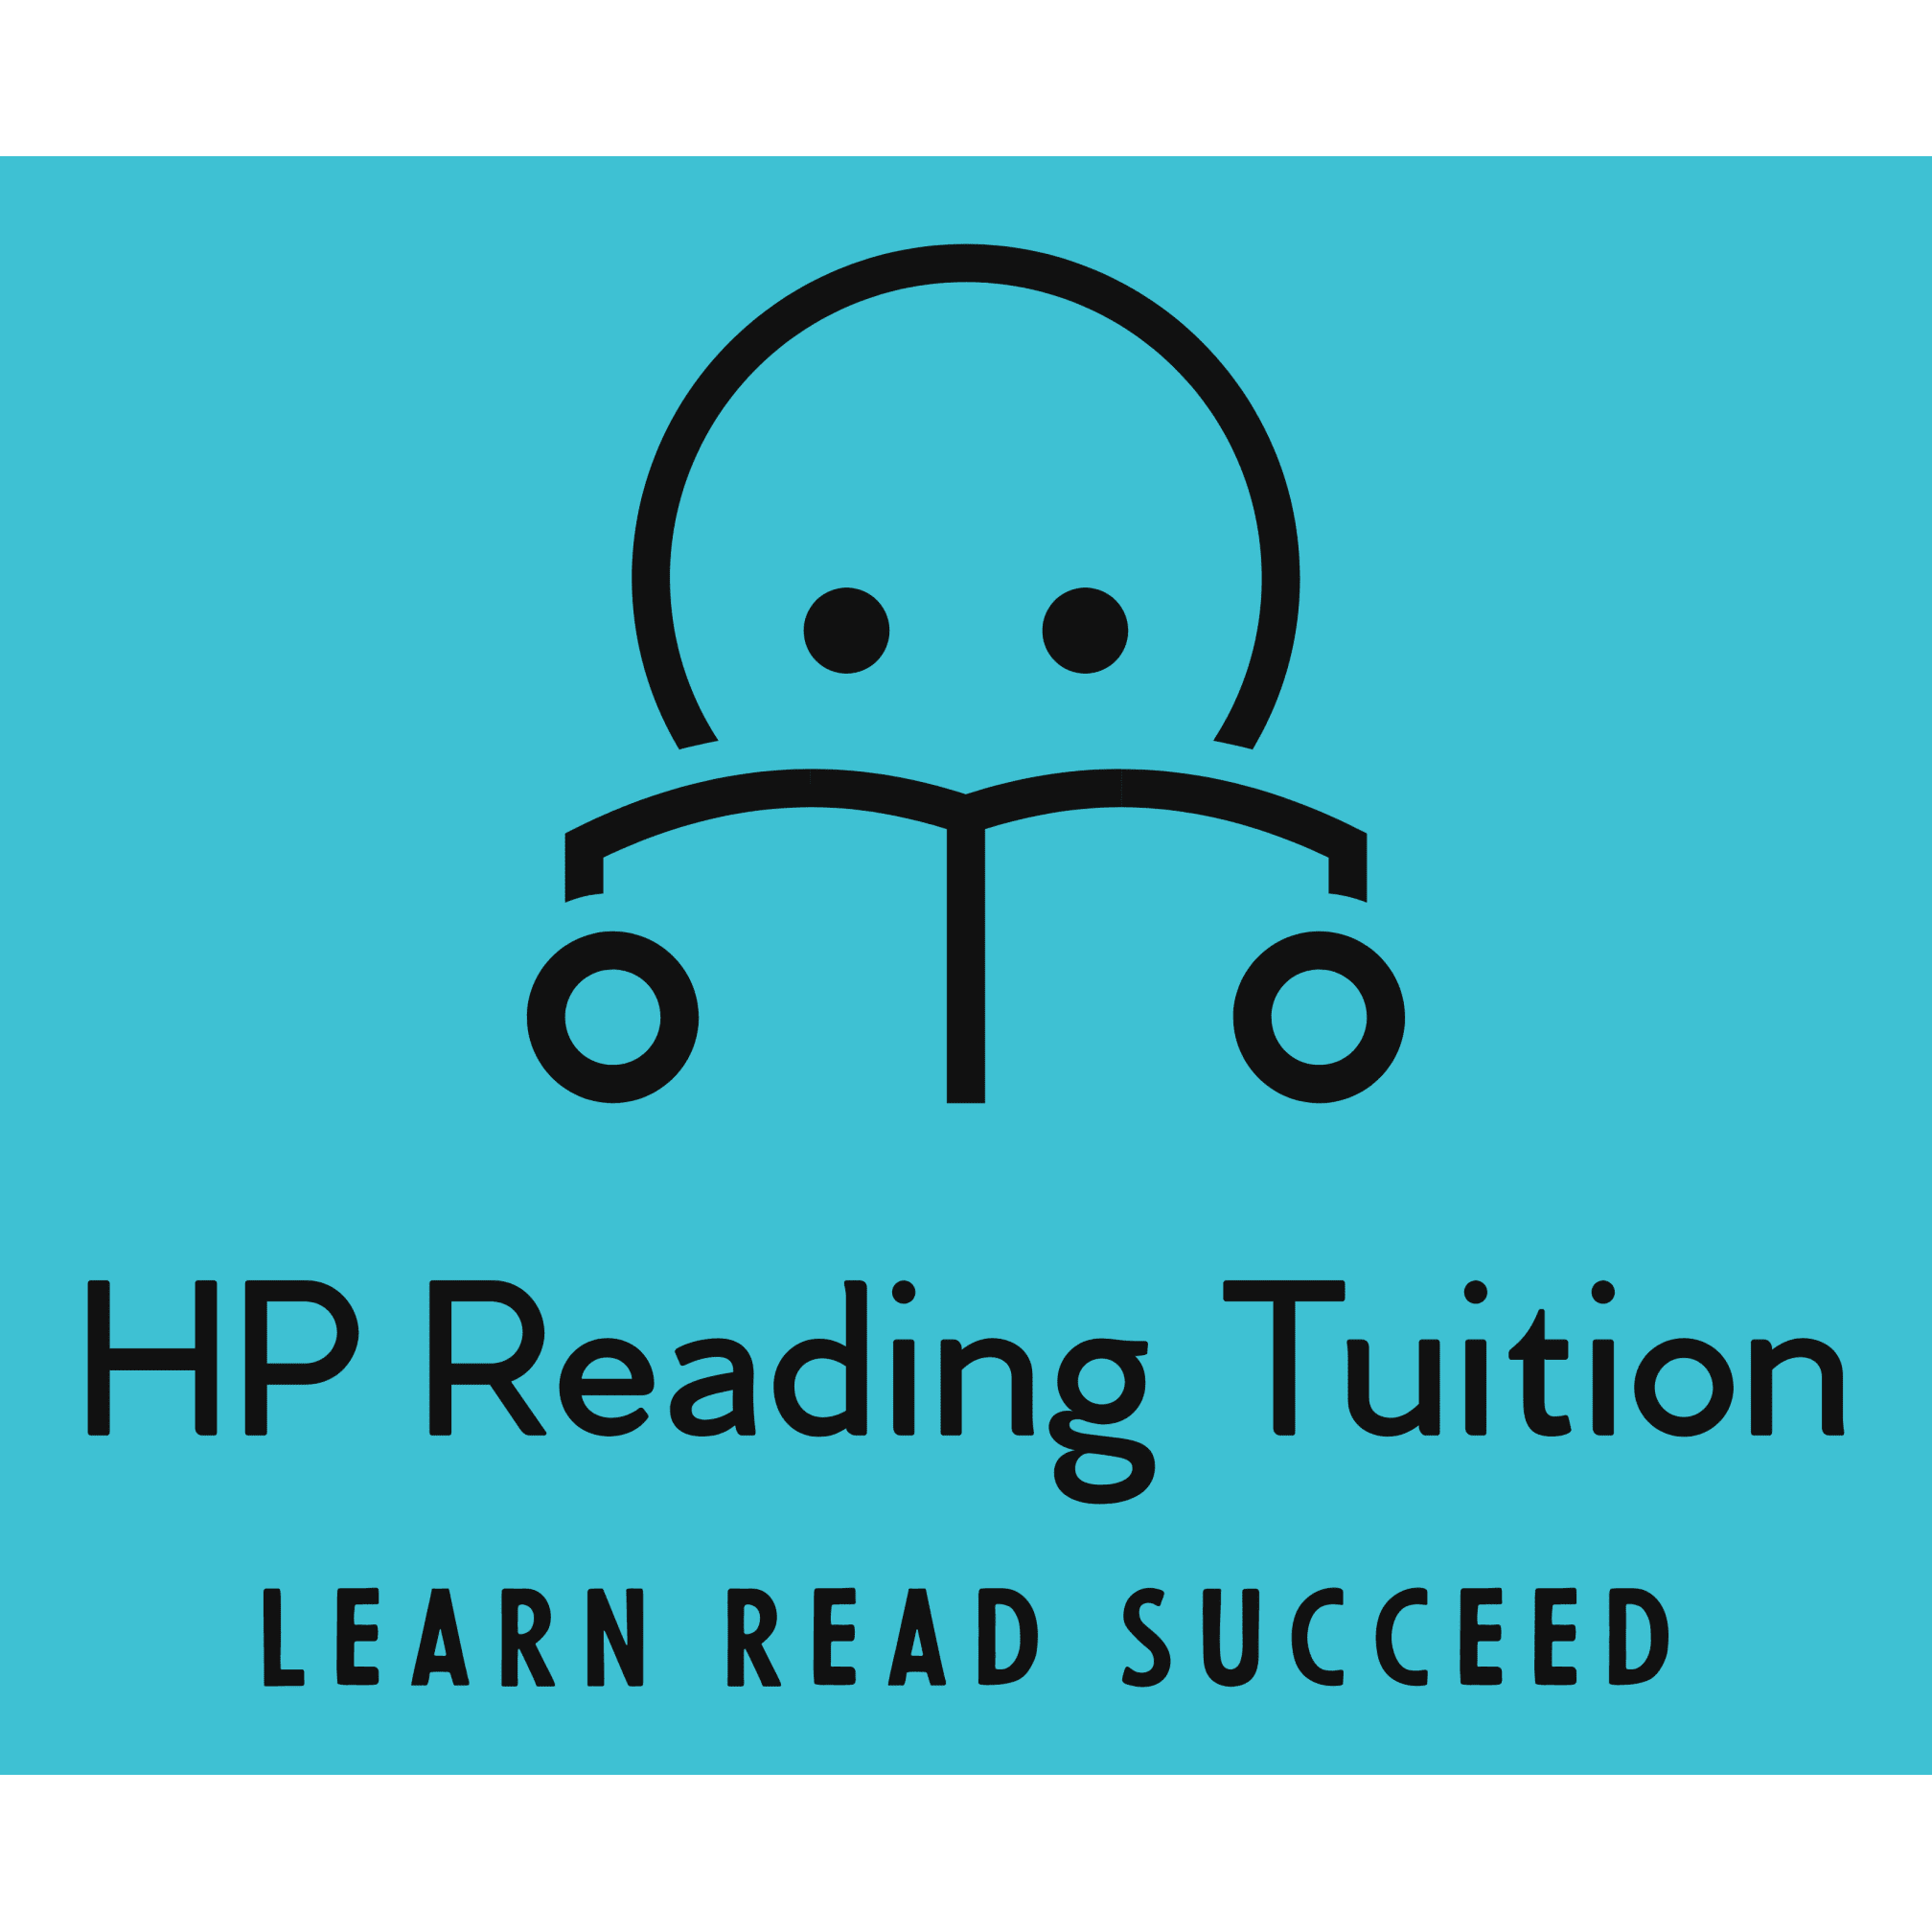 HP Reading Tuition Logo